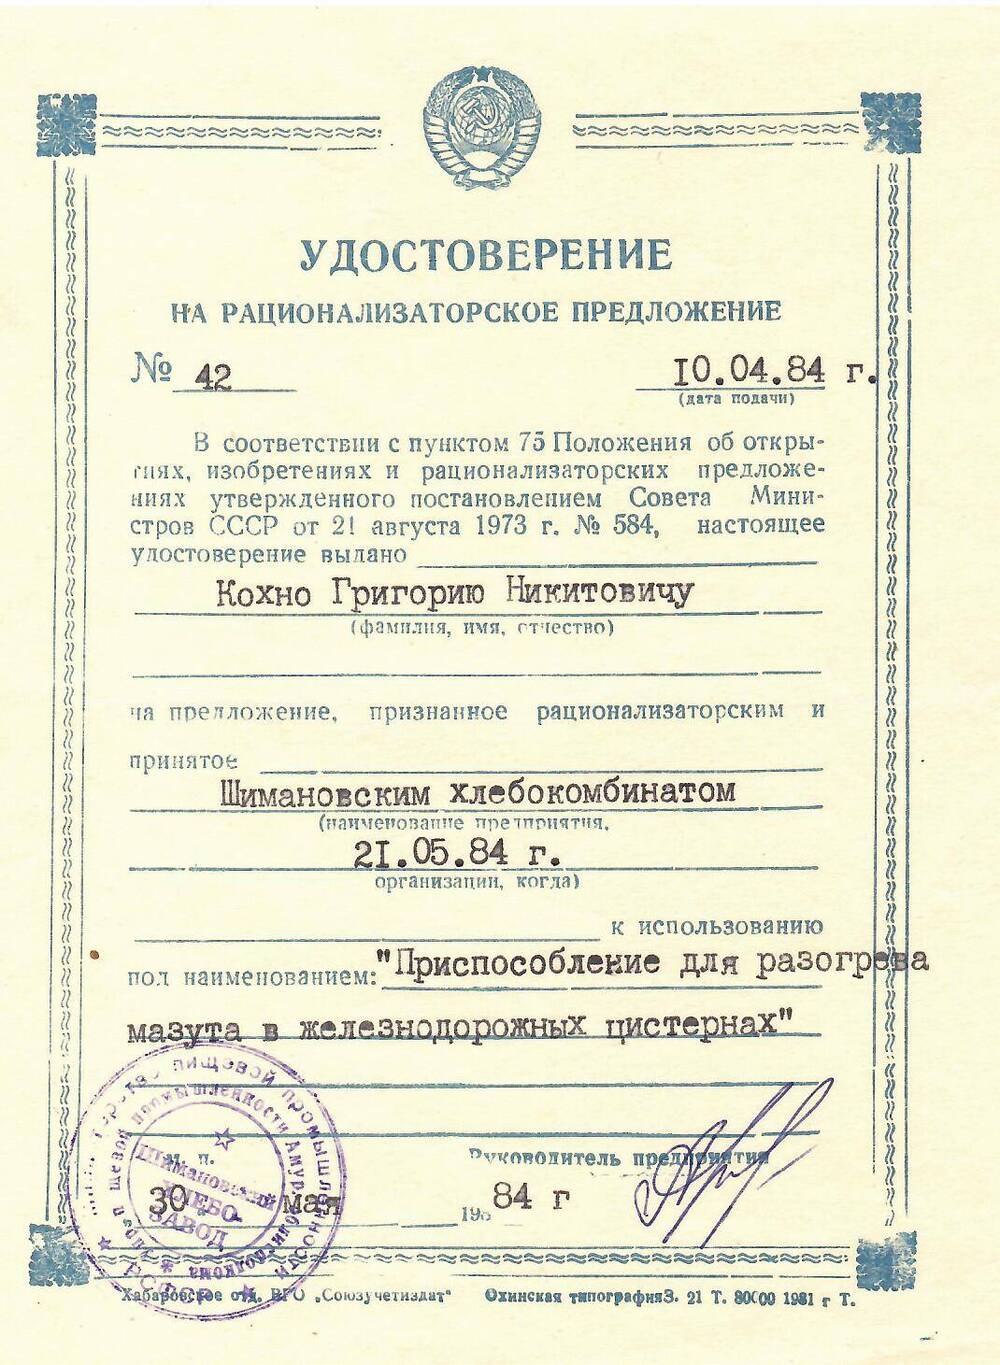 Удостоверение на рационализаторское предложение № 42 на имя Кохно Григория Никитовича